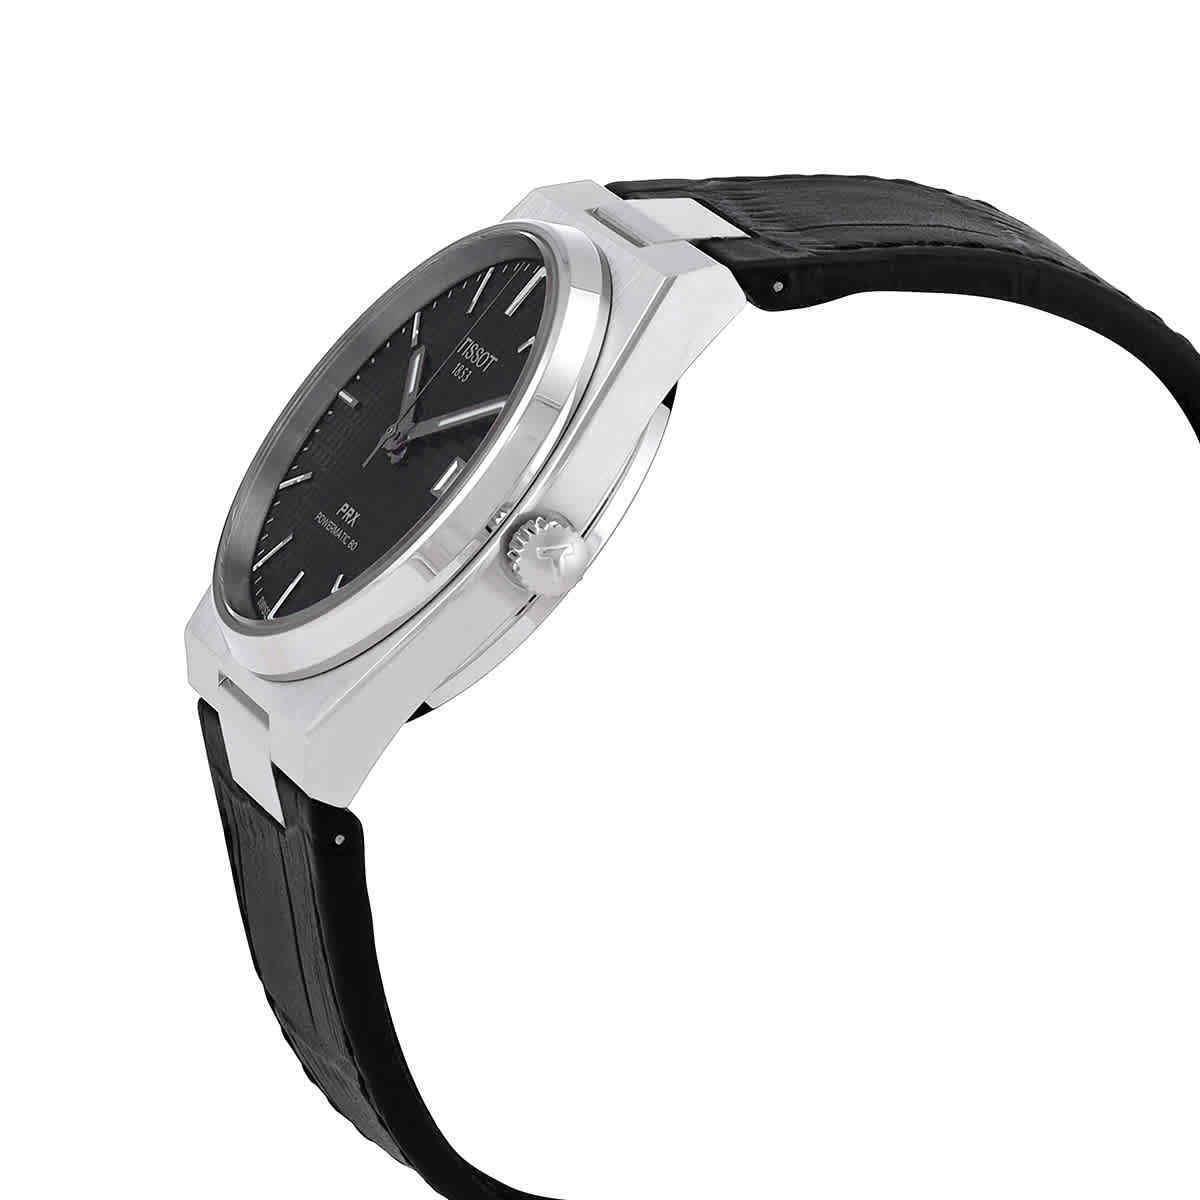 Tissot Prx Powermatic 80 Automatic Black Dial Men`s Watch T1374071605100 - Dial: Black, Band: Black, Bezel: Silver